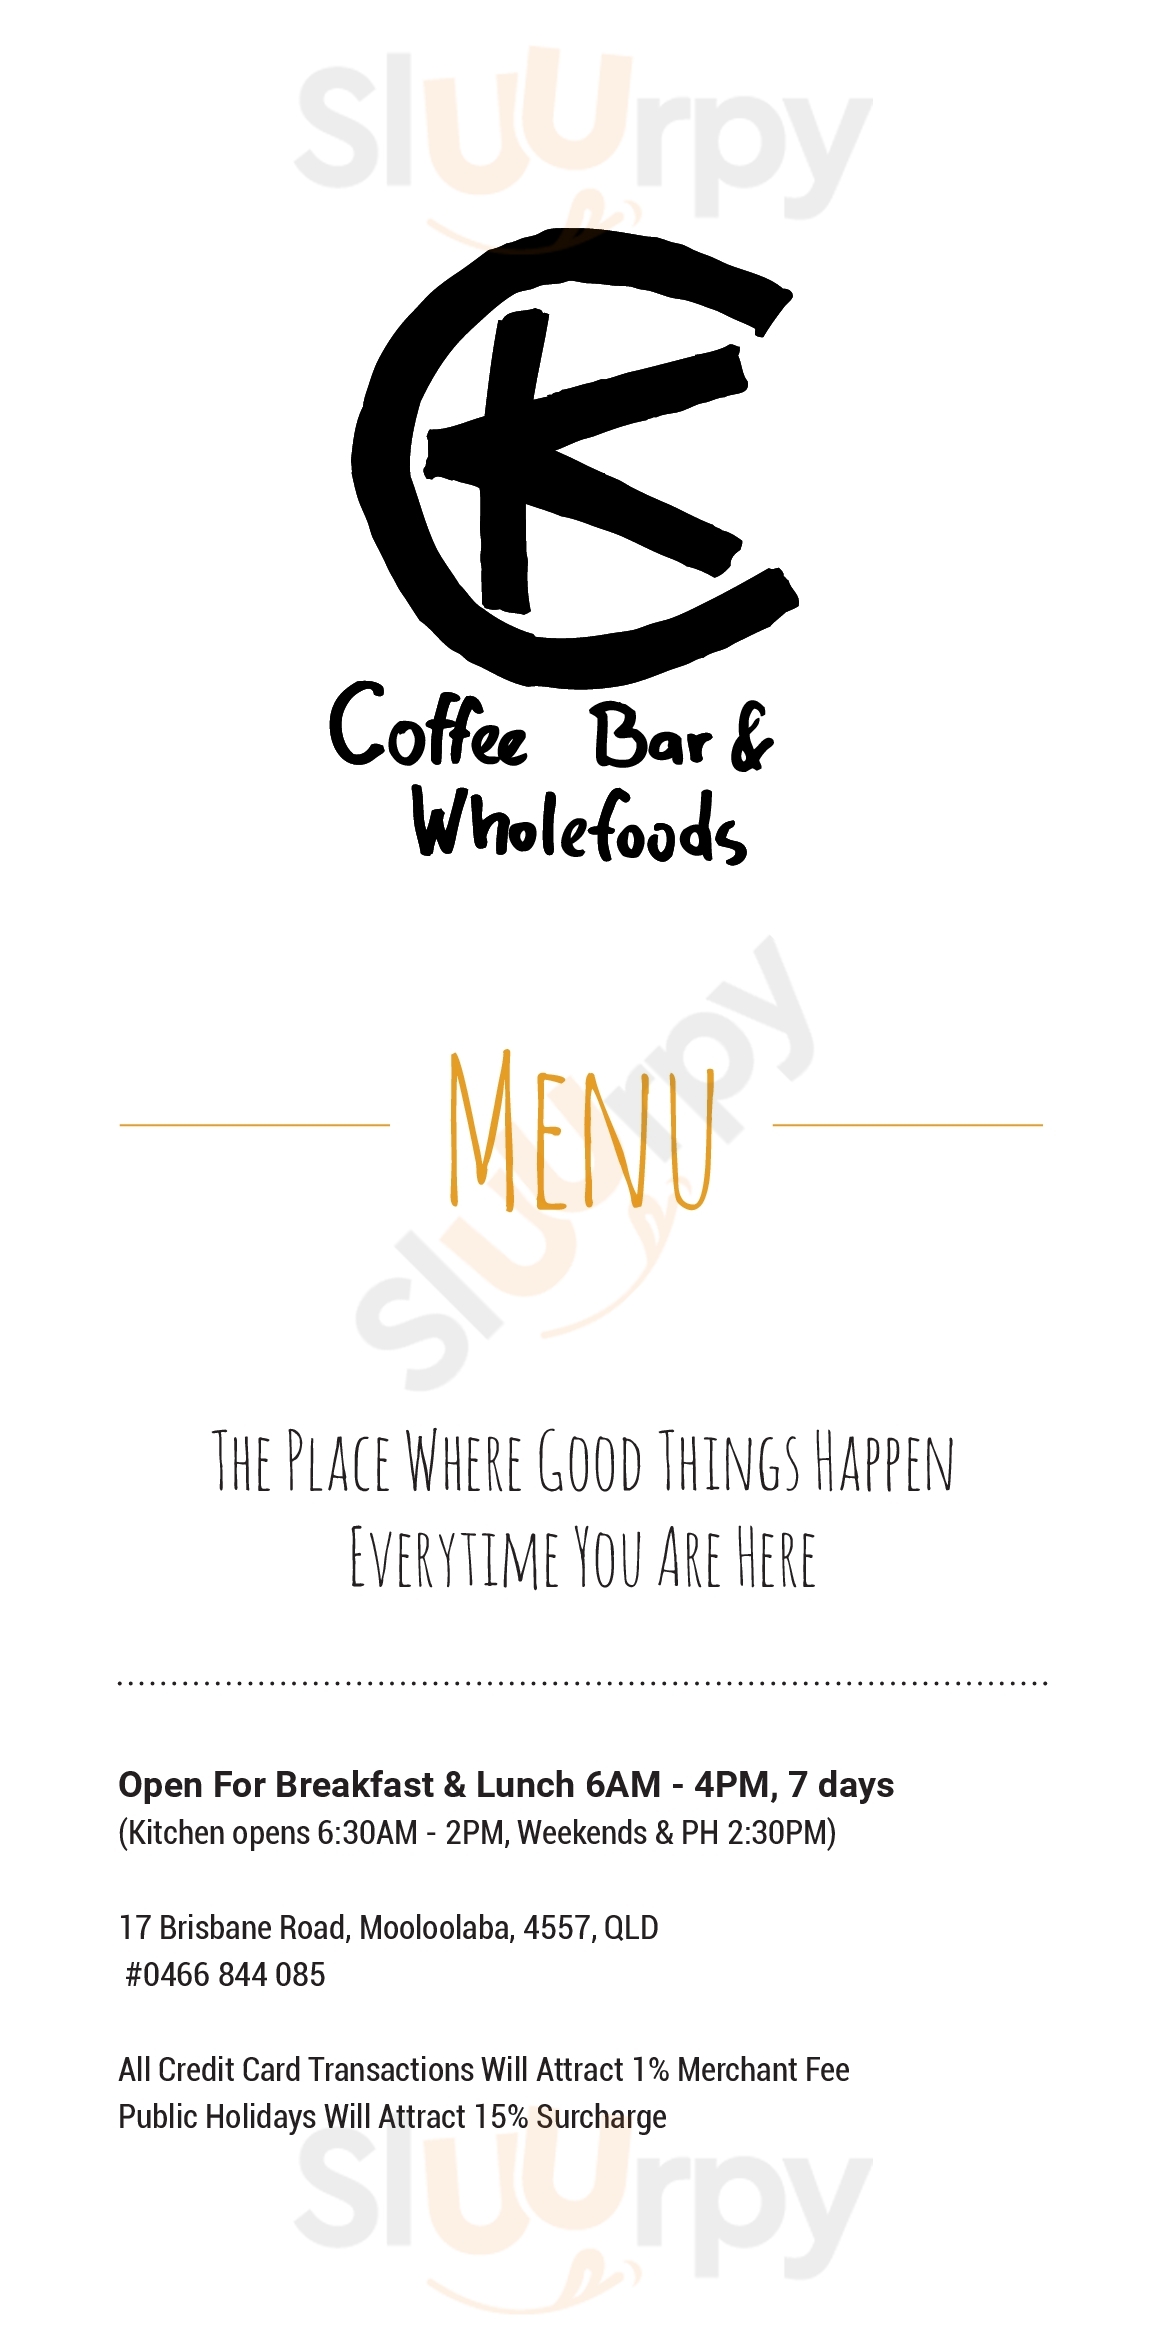 Ck Coffee Bar & Wholefoods Mooloolaba Menu - 1